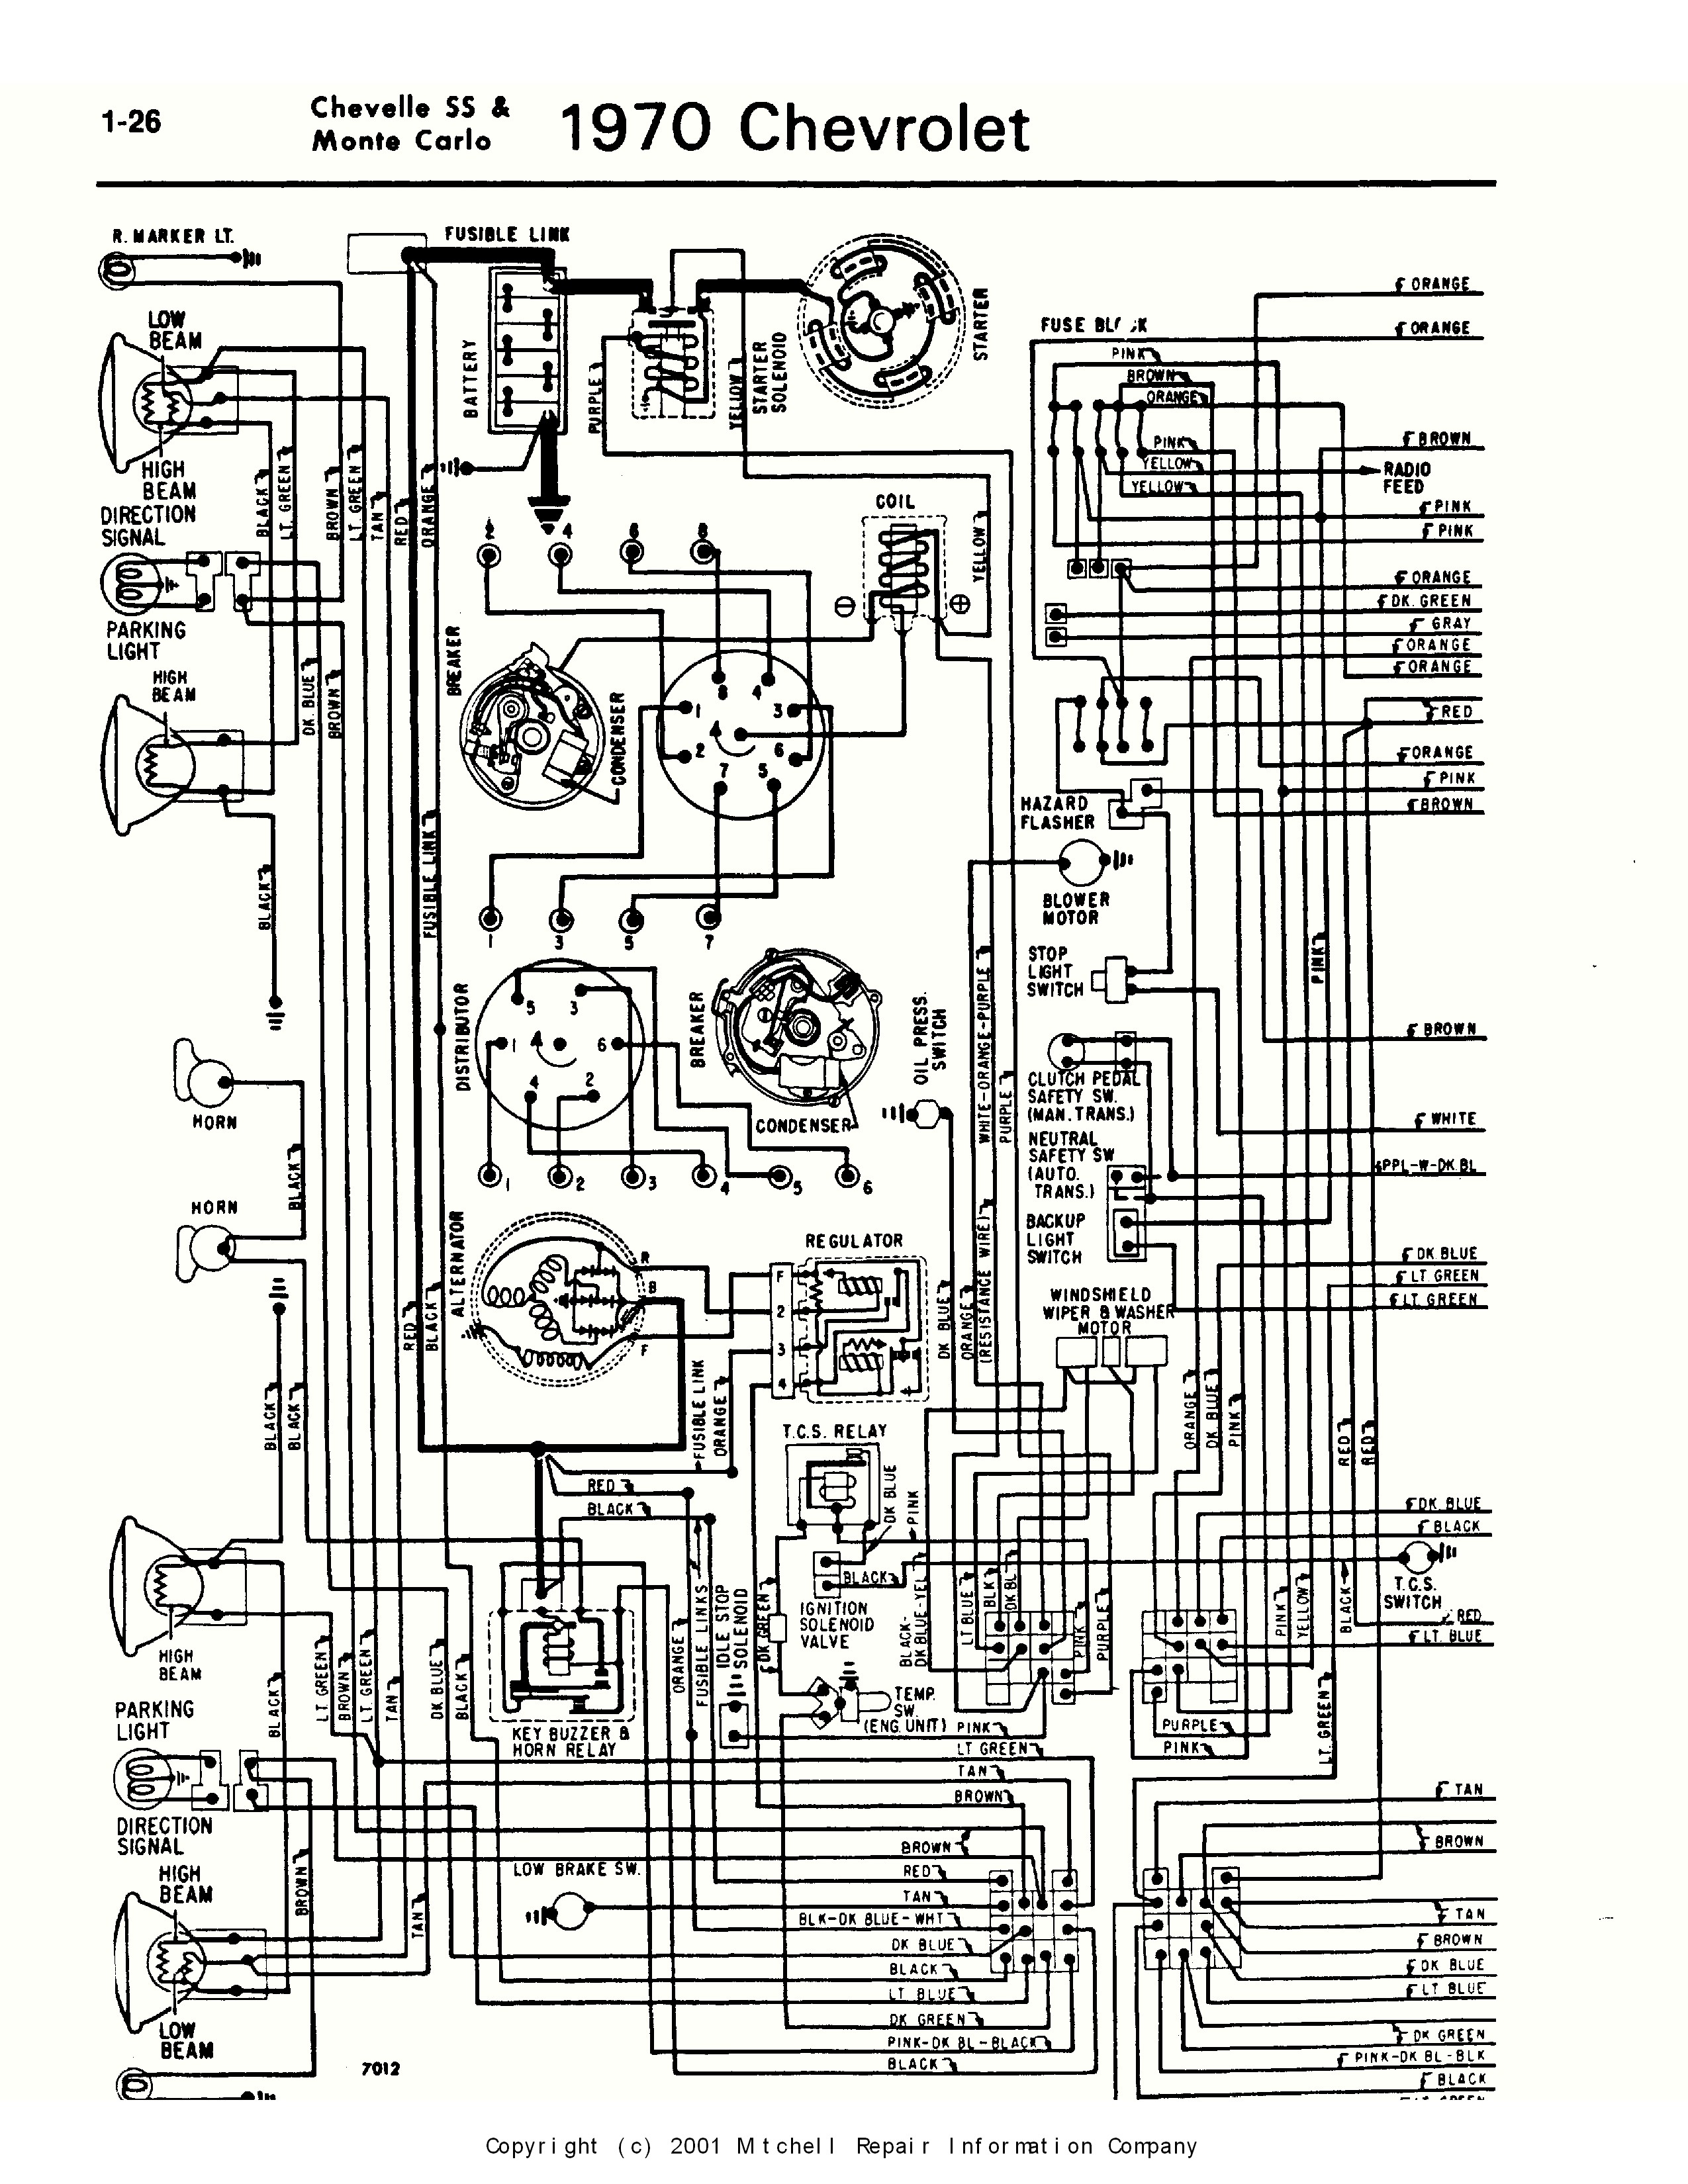 system diagram 1970 corvette wiring diagram 1951 ford truck chevy rh bruio co